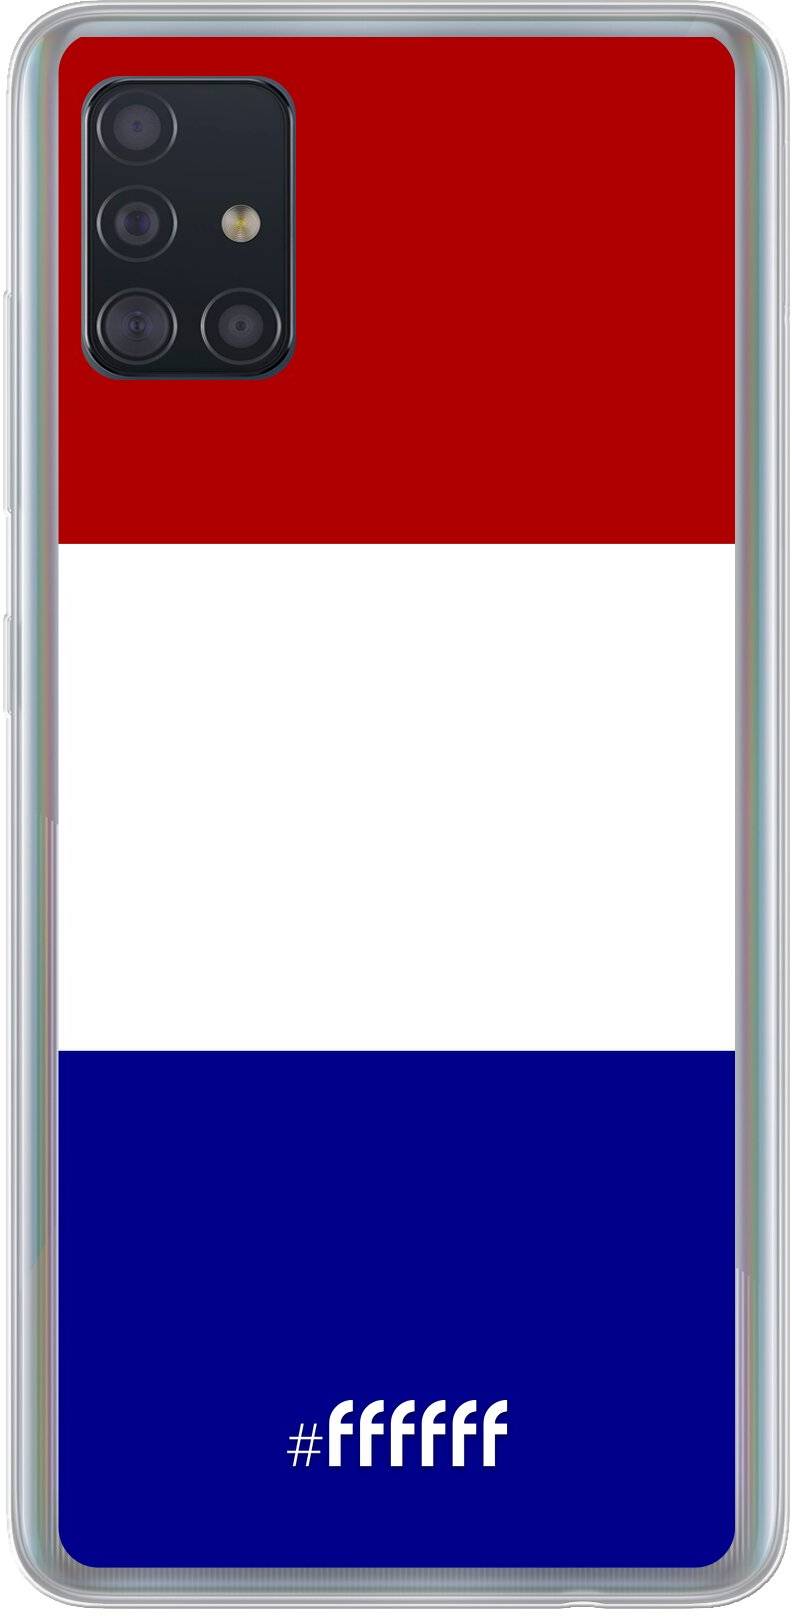 Nederlandse vlag Galaxy A51